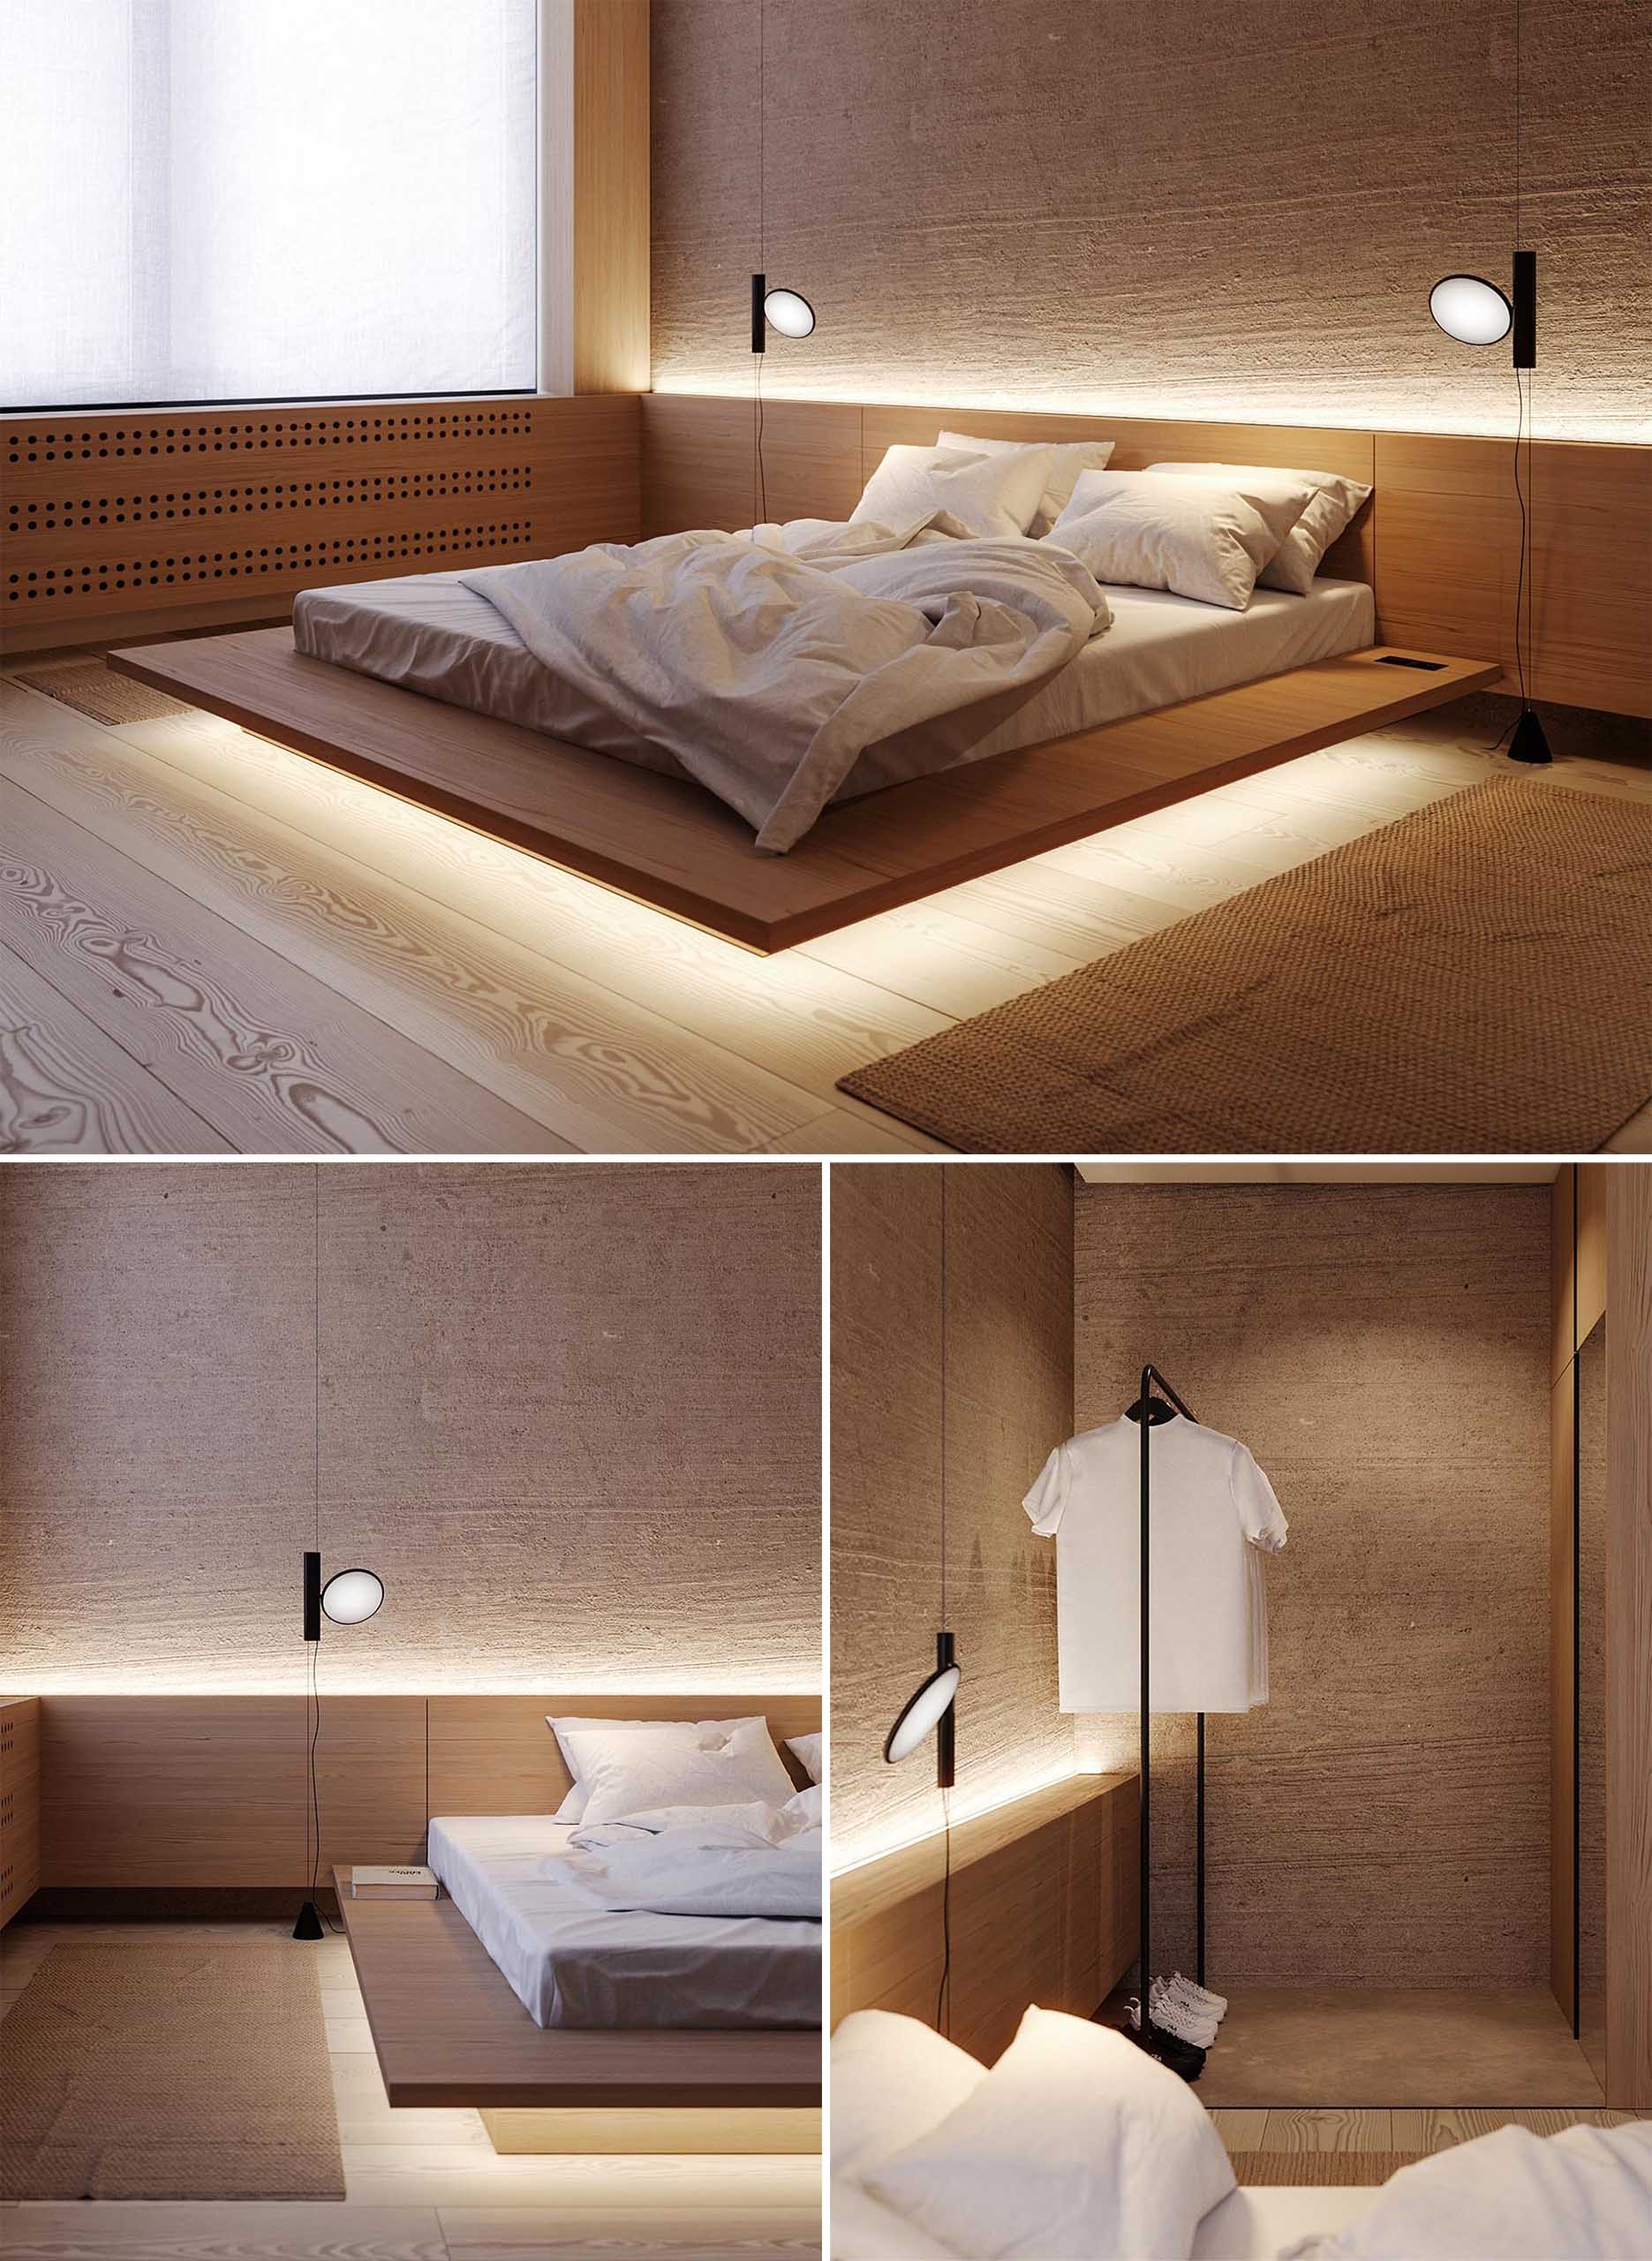 Bedroom Lighting Ideas - A modern bedroom with a full width headboard that showcases hidden LED lighting.